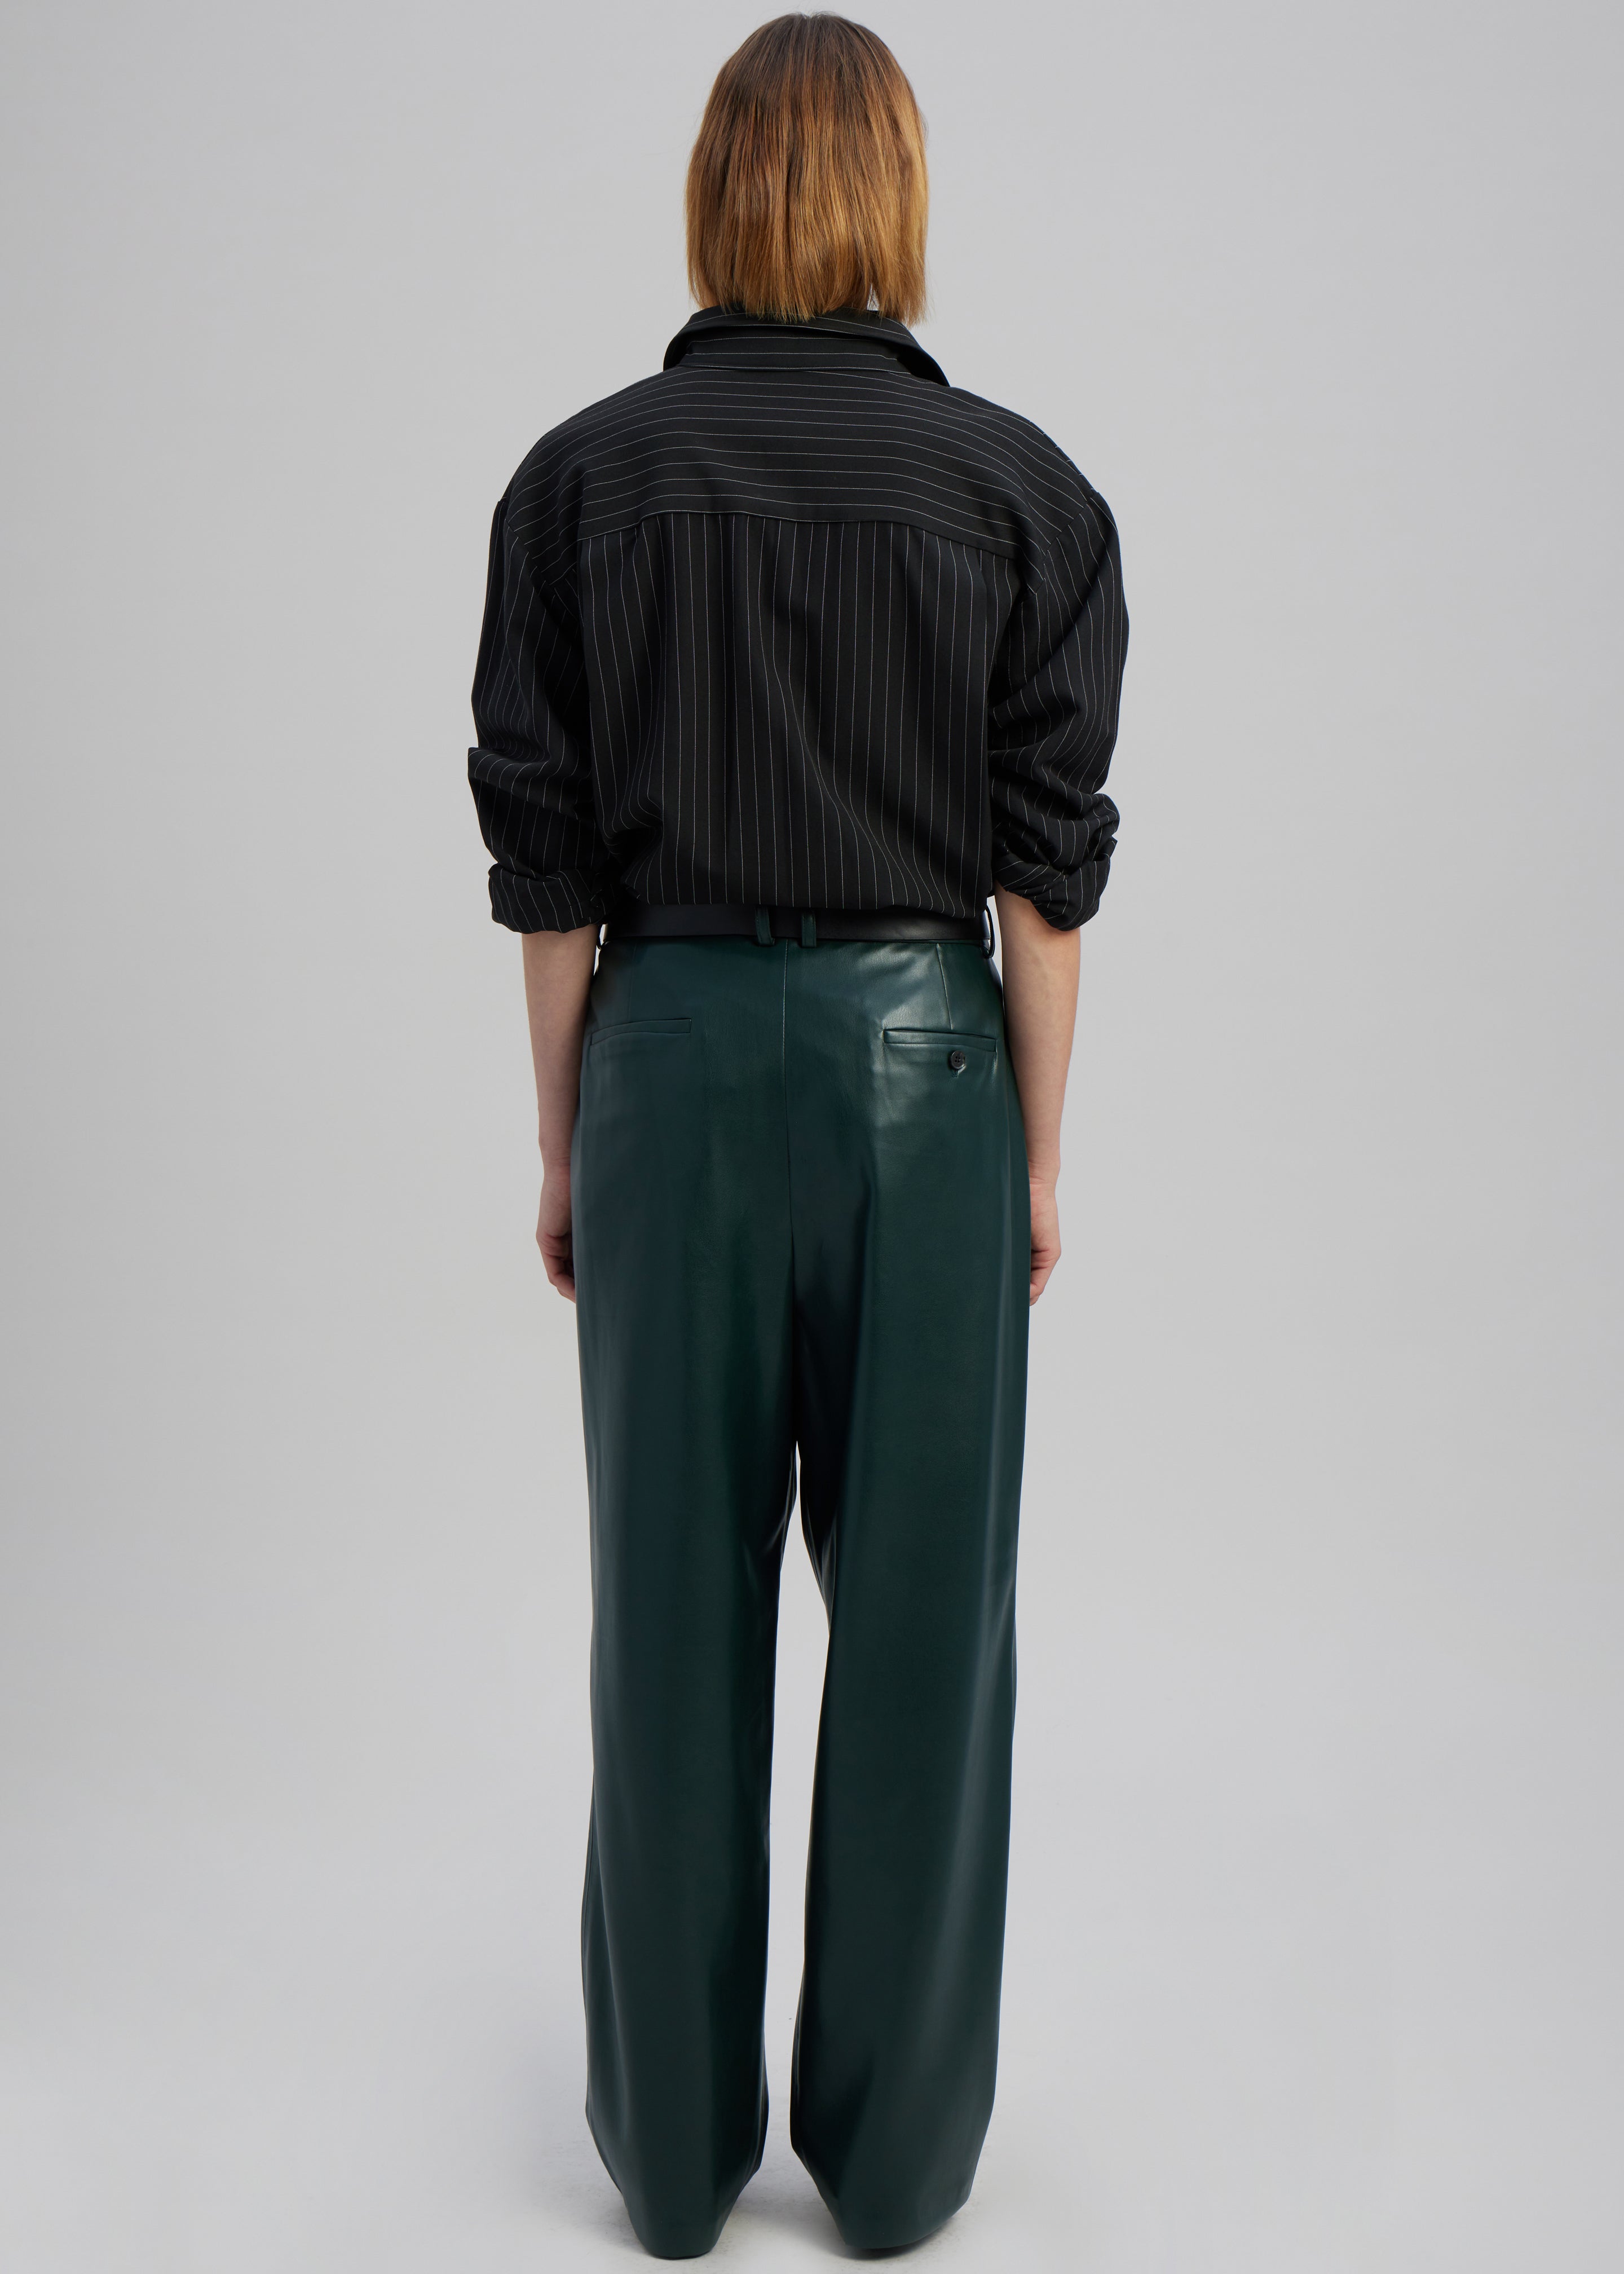 Pernille Faux Leather Pants - Bottle Green - 11